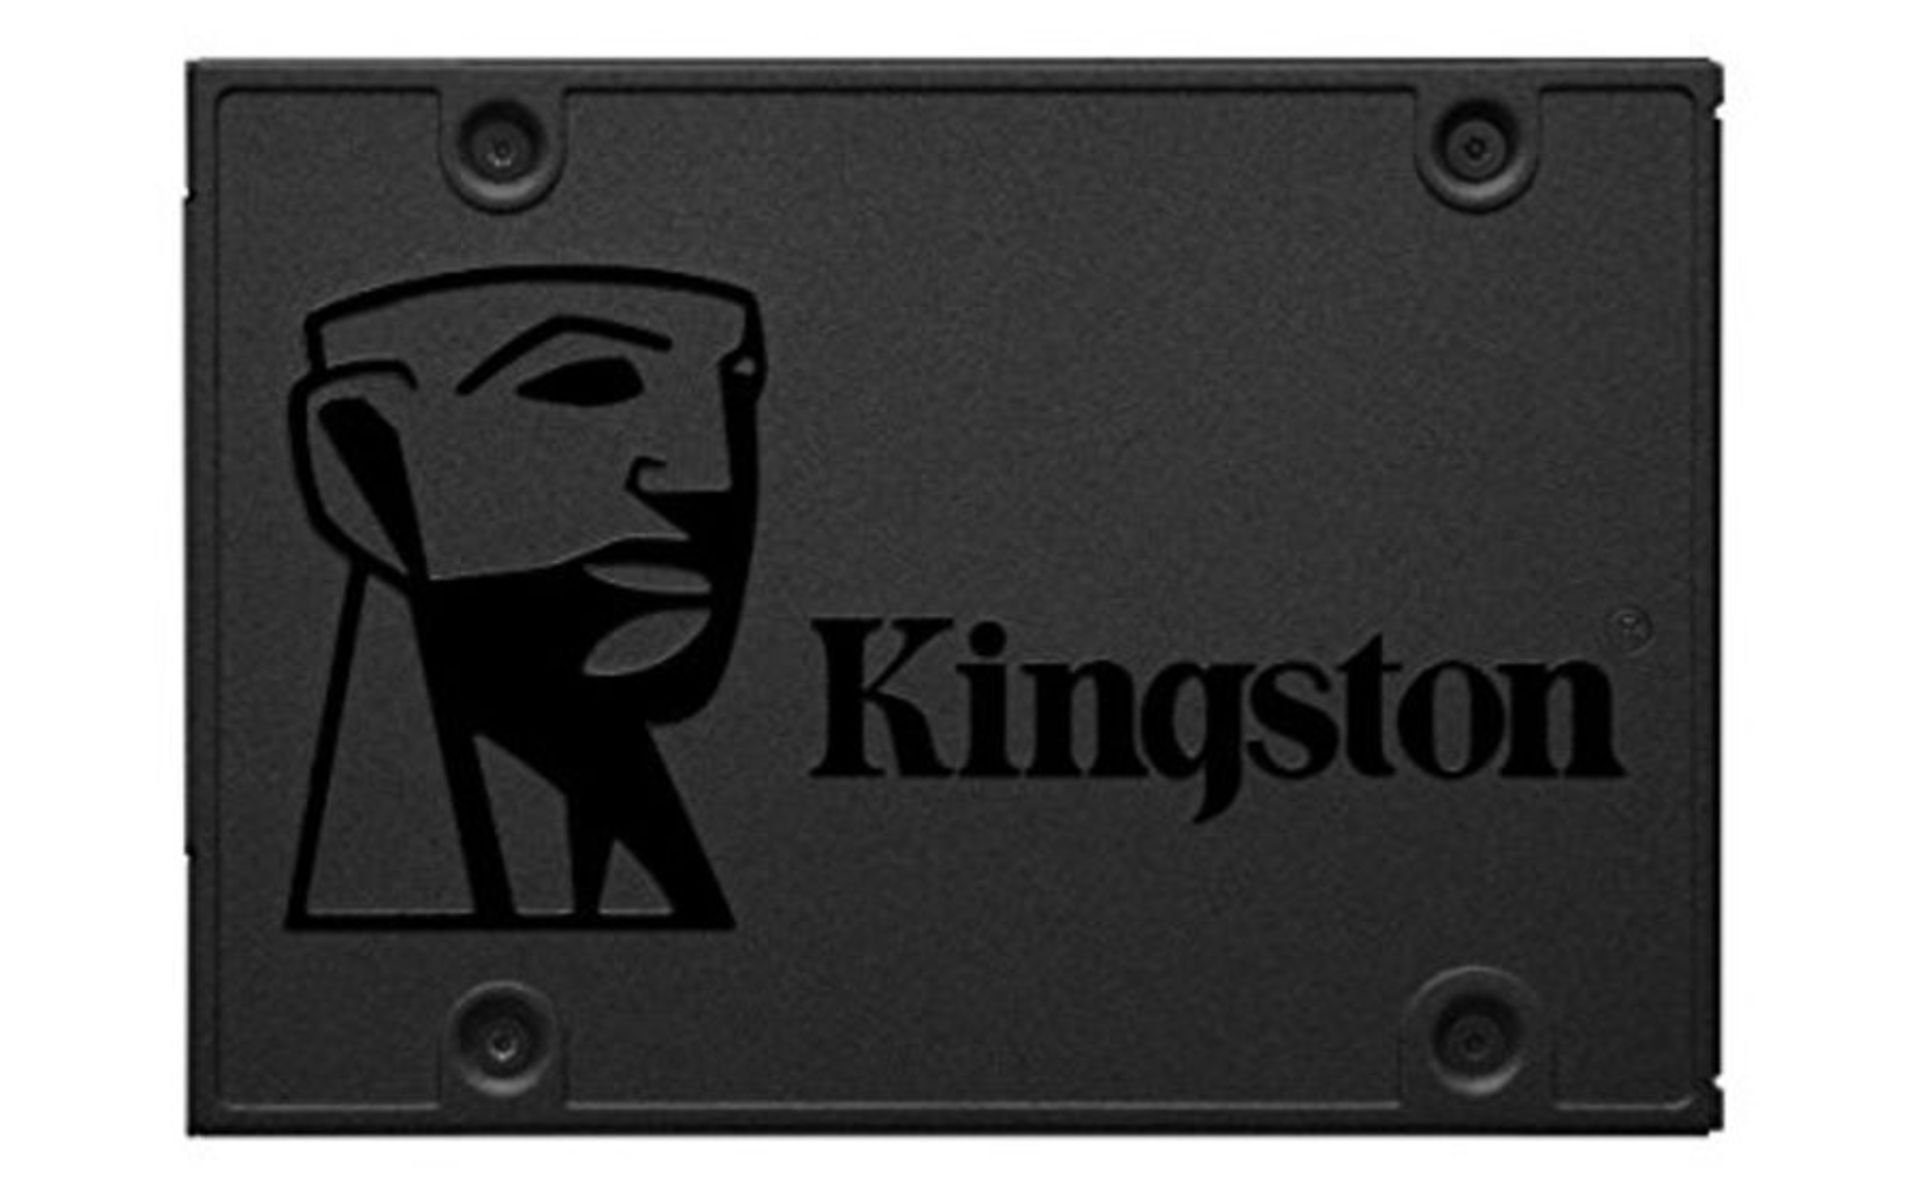 Kingston SSDNow A400 240GB SATA 3 Solid State Drive (SA400S37/240G), Black